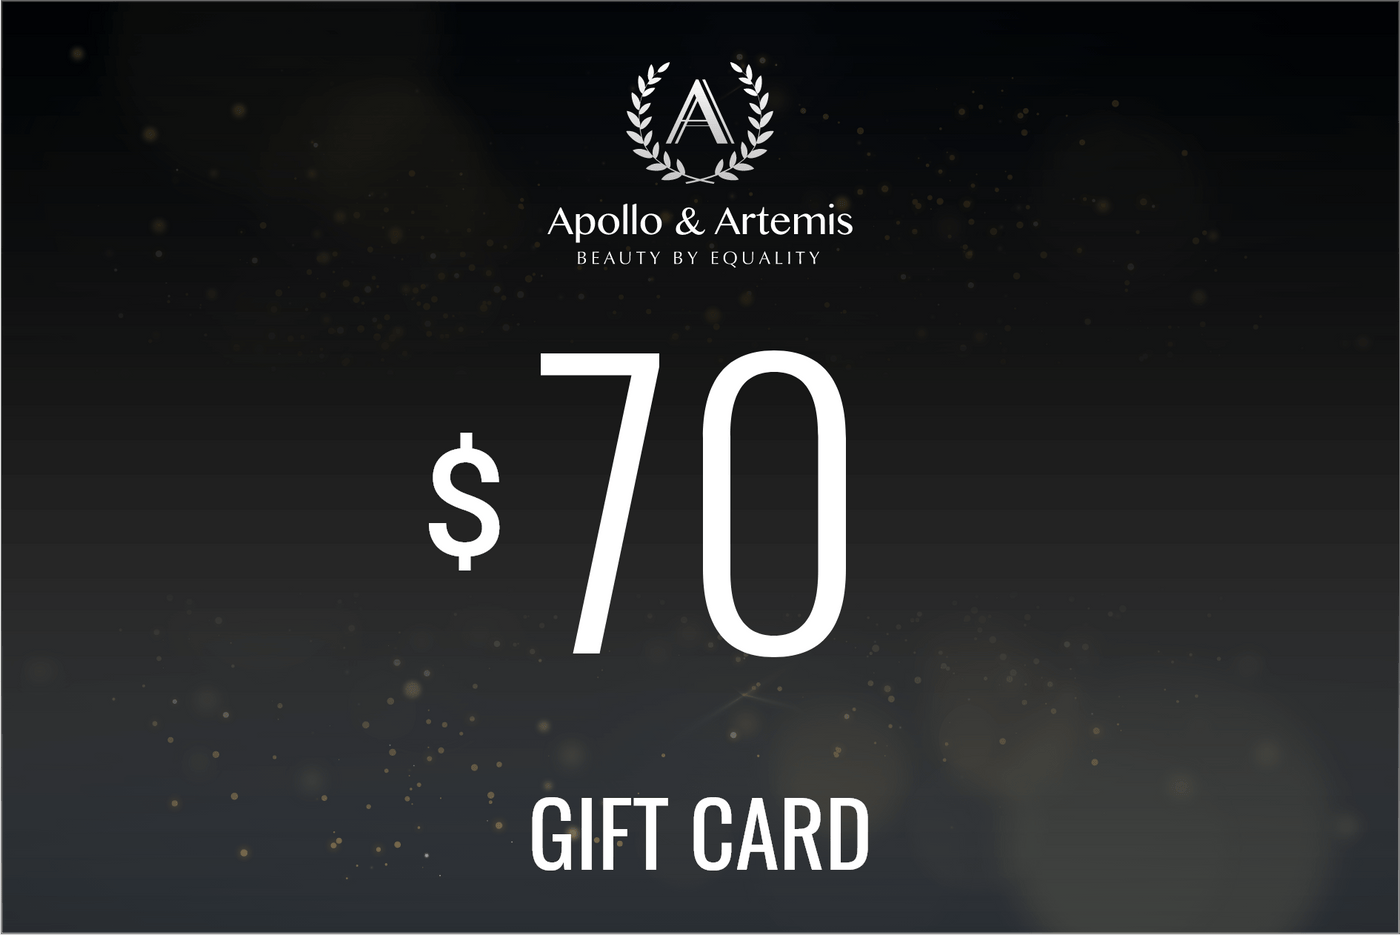 Apollo & Artemis Gift Card